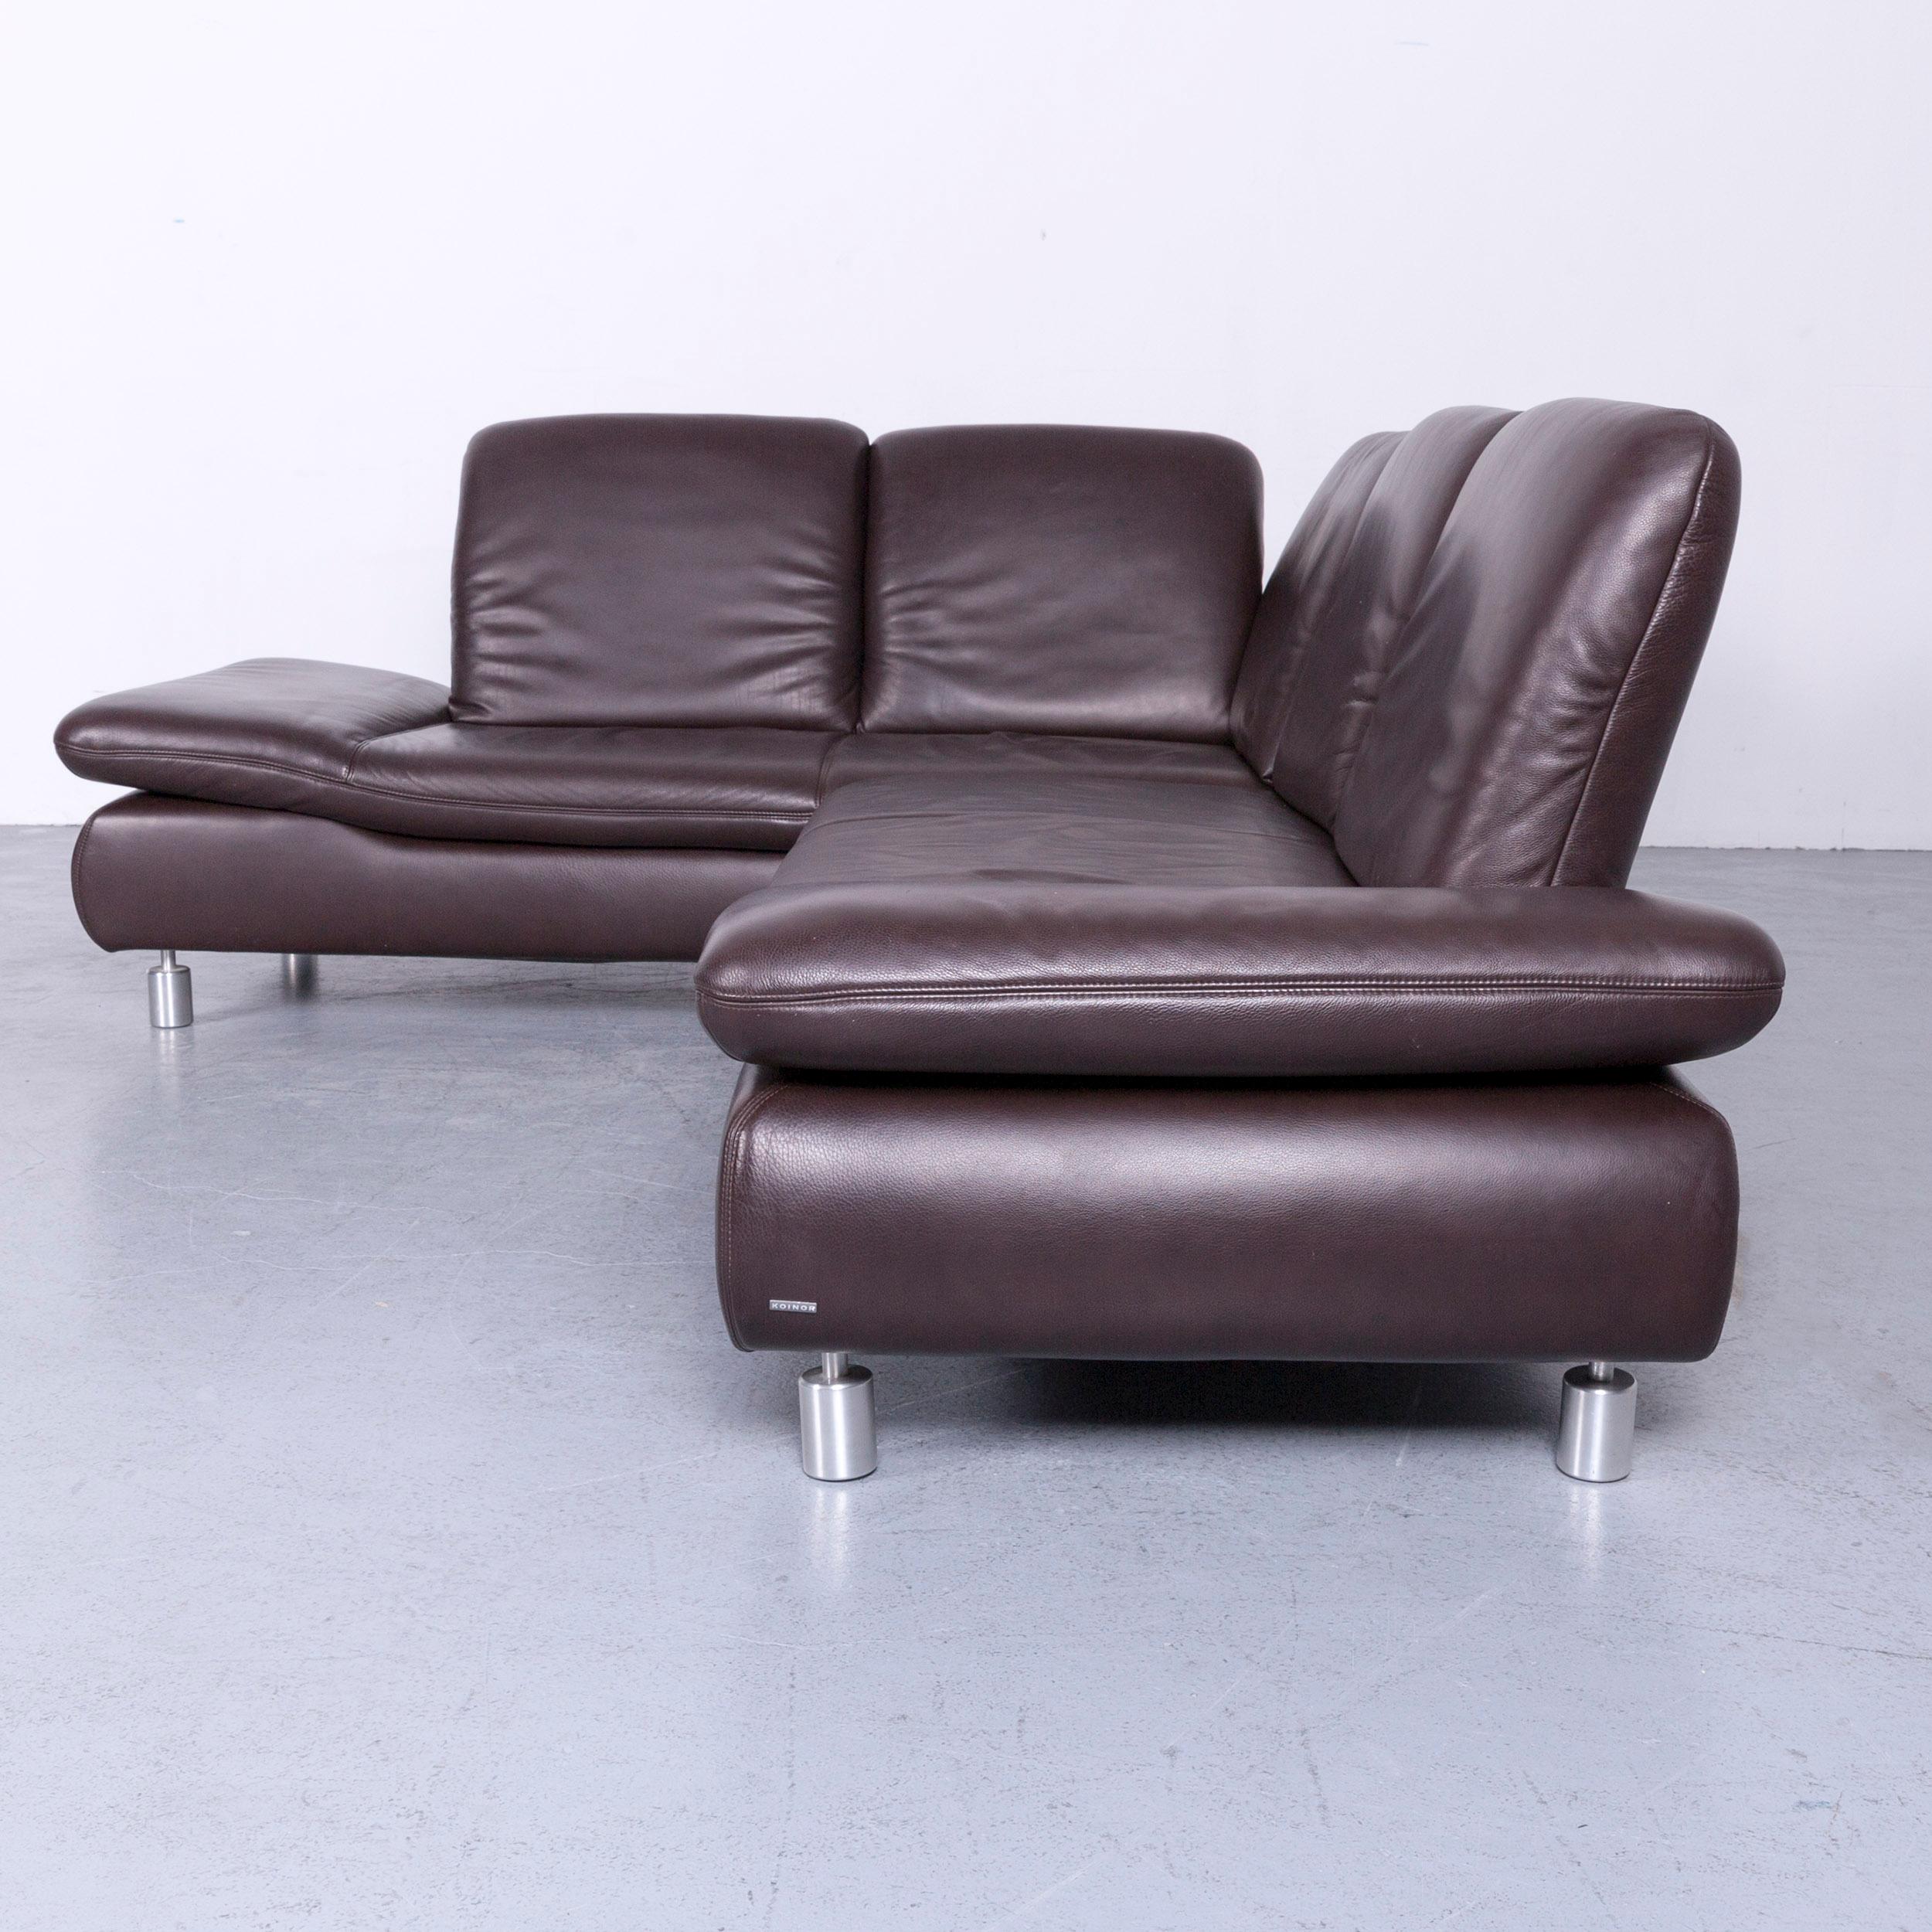 Koinor Rivoli Designer Leather Corner Sofa in Brown with Functions 5